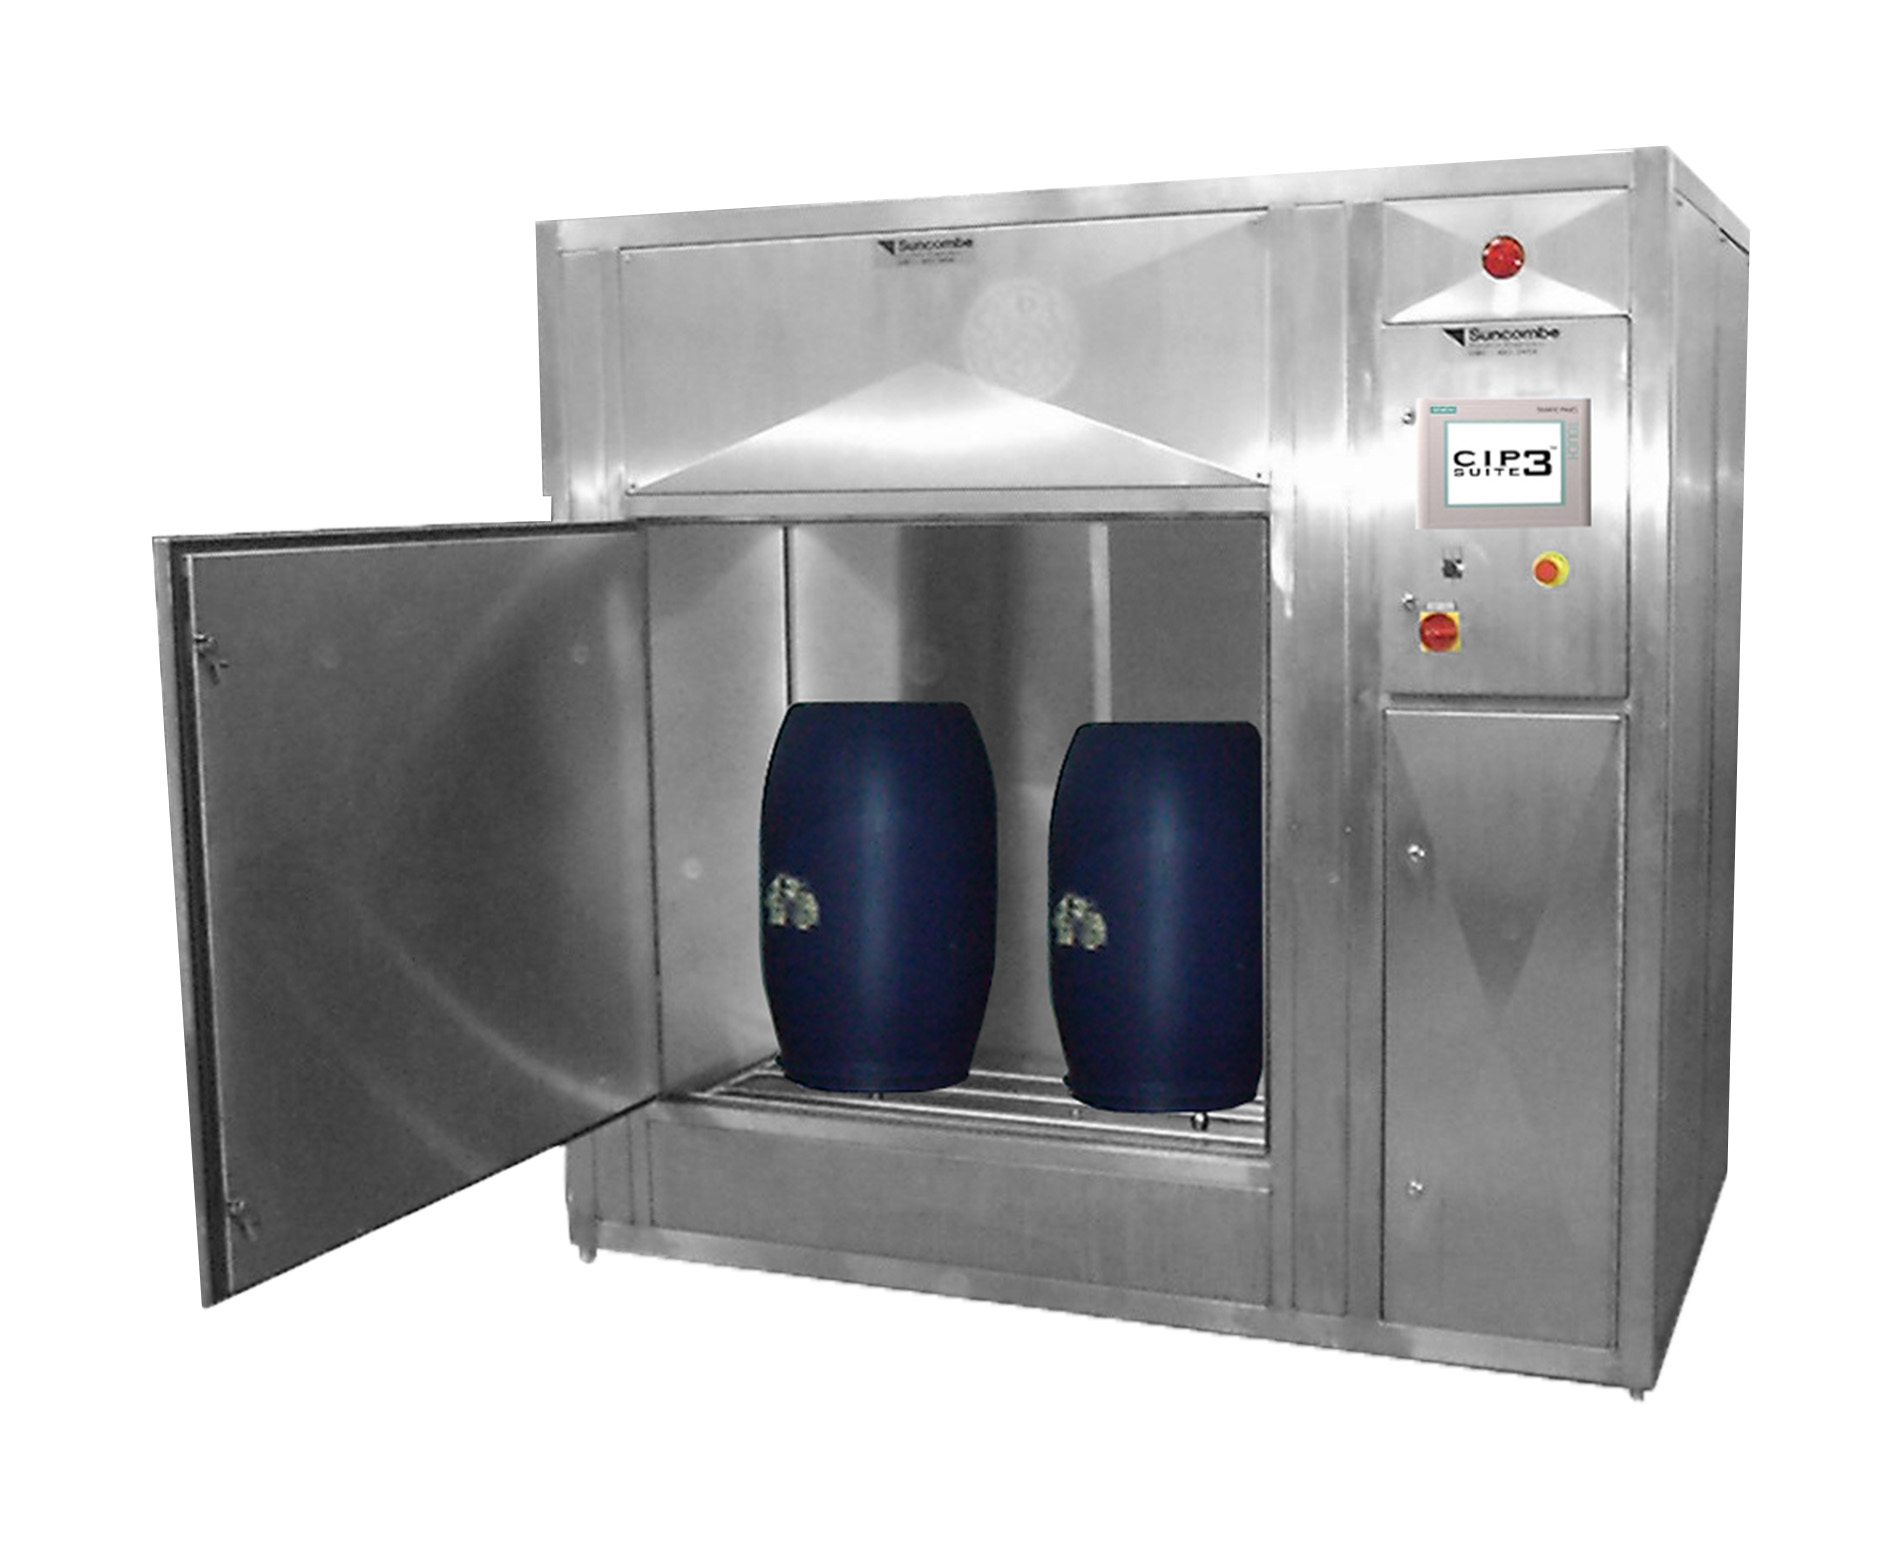 DRUMWASHER - Decontamination Facilities, Washing Systems